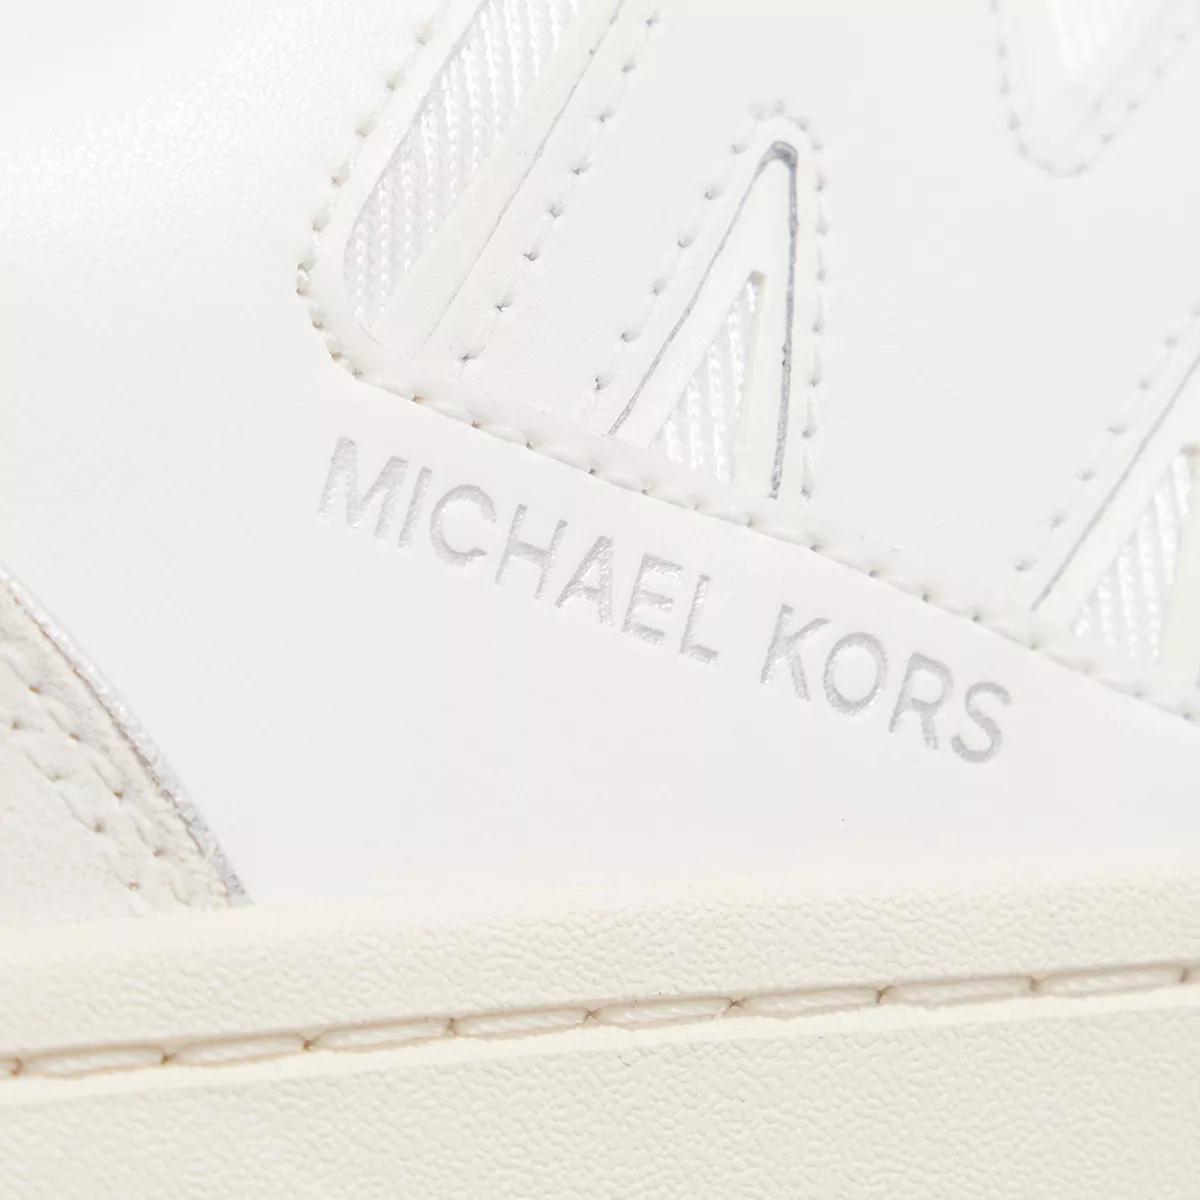 Michael Kors Sneakers - Rebel Lace Up - Gr. 39 (EU) - in Weiß - für Damen von Michael Kors